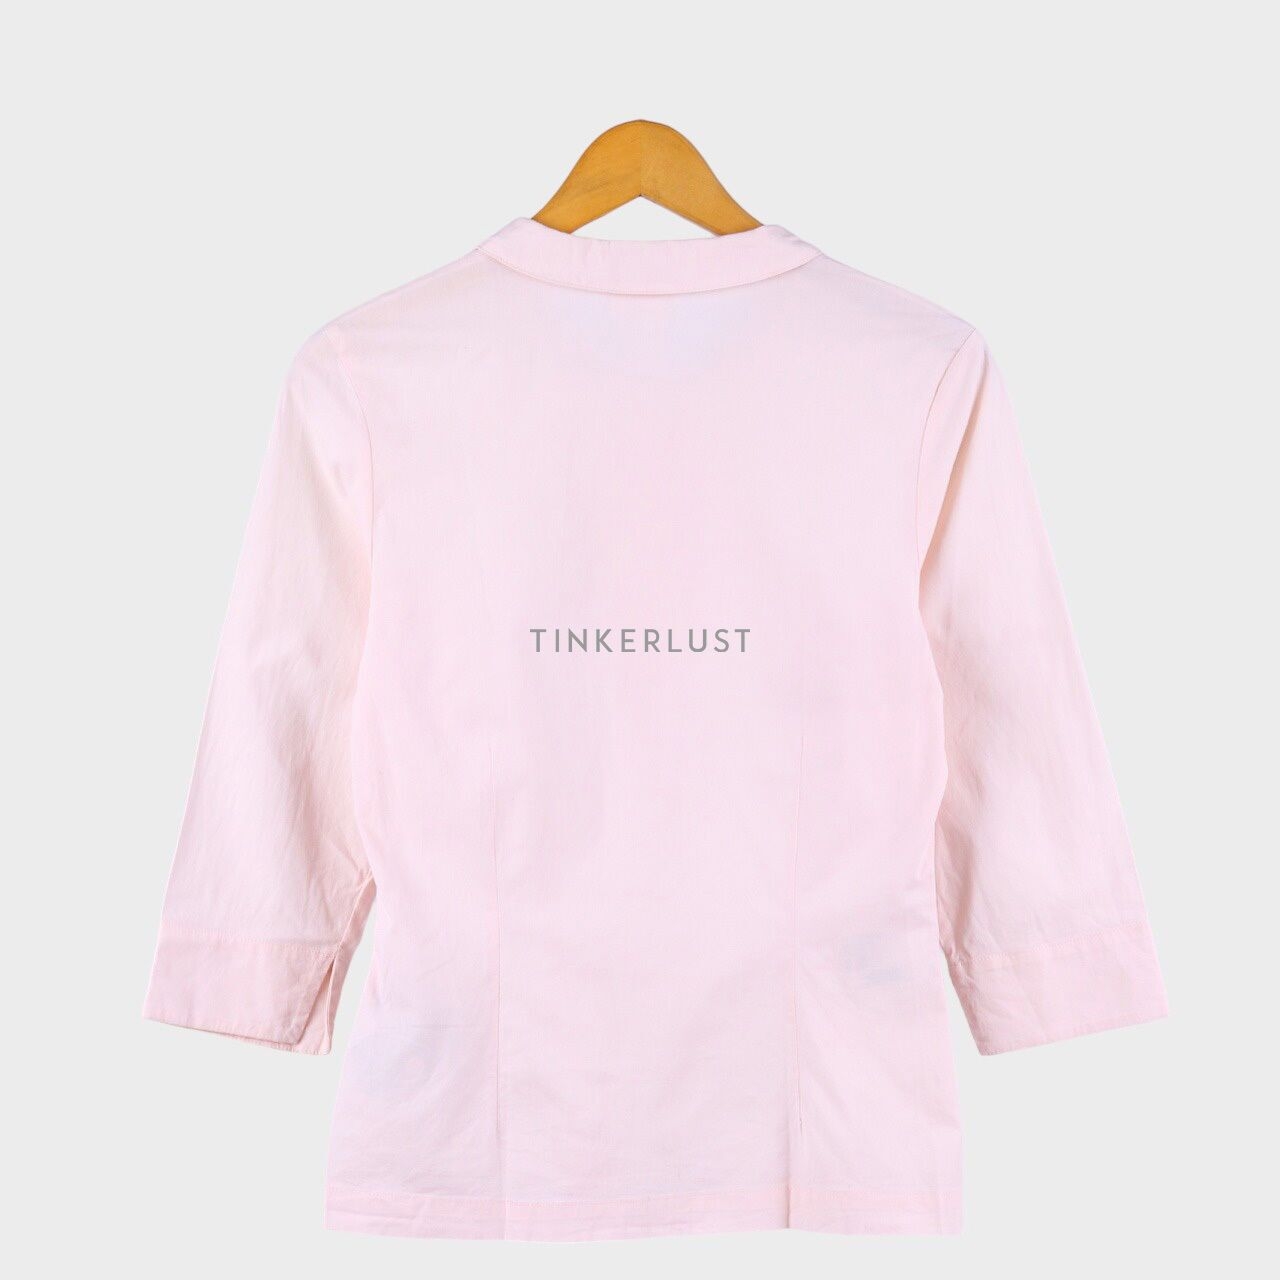 Laura Ashley Soft Pink Shirt